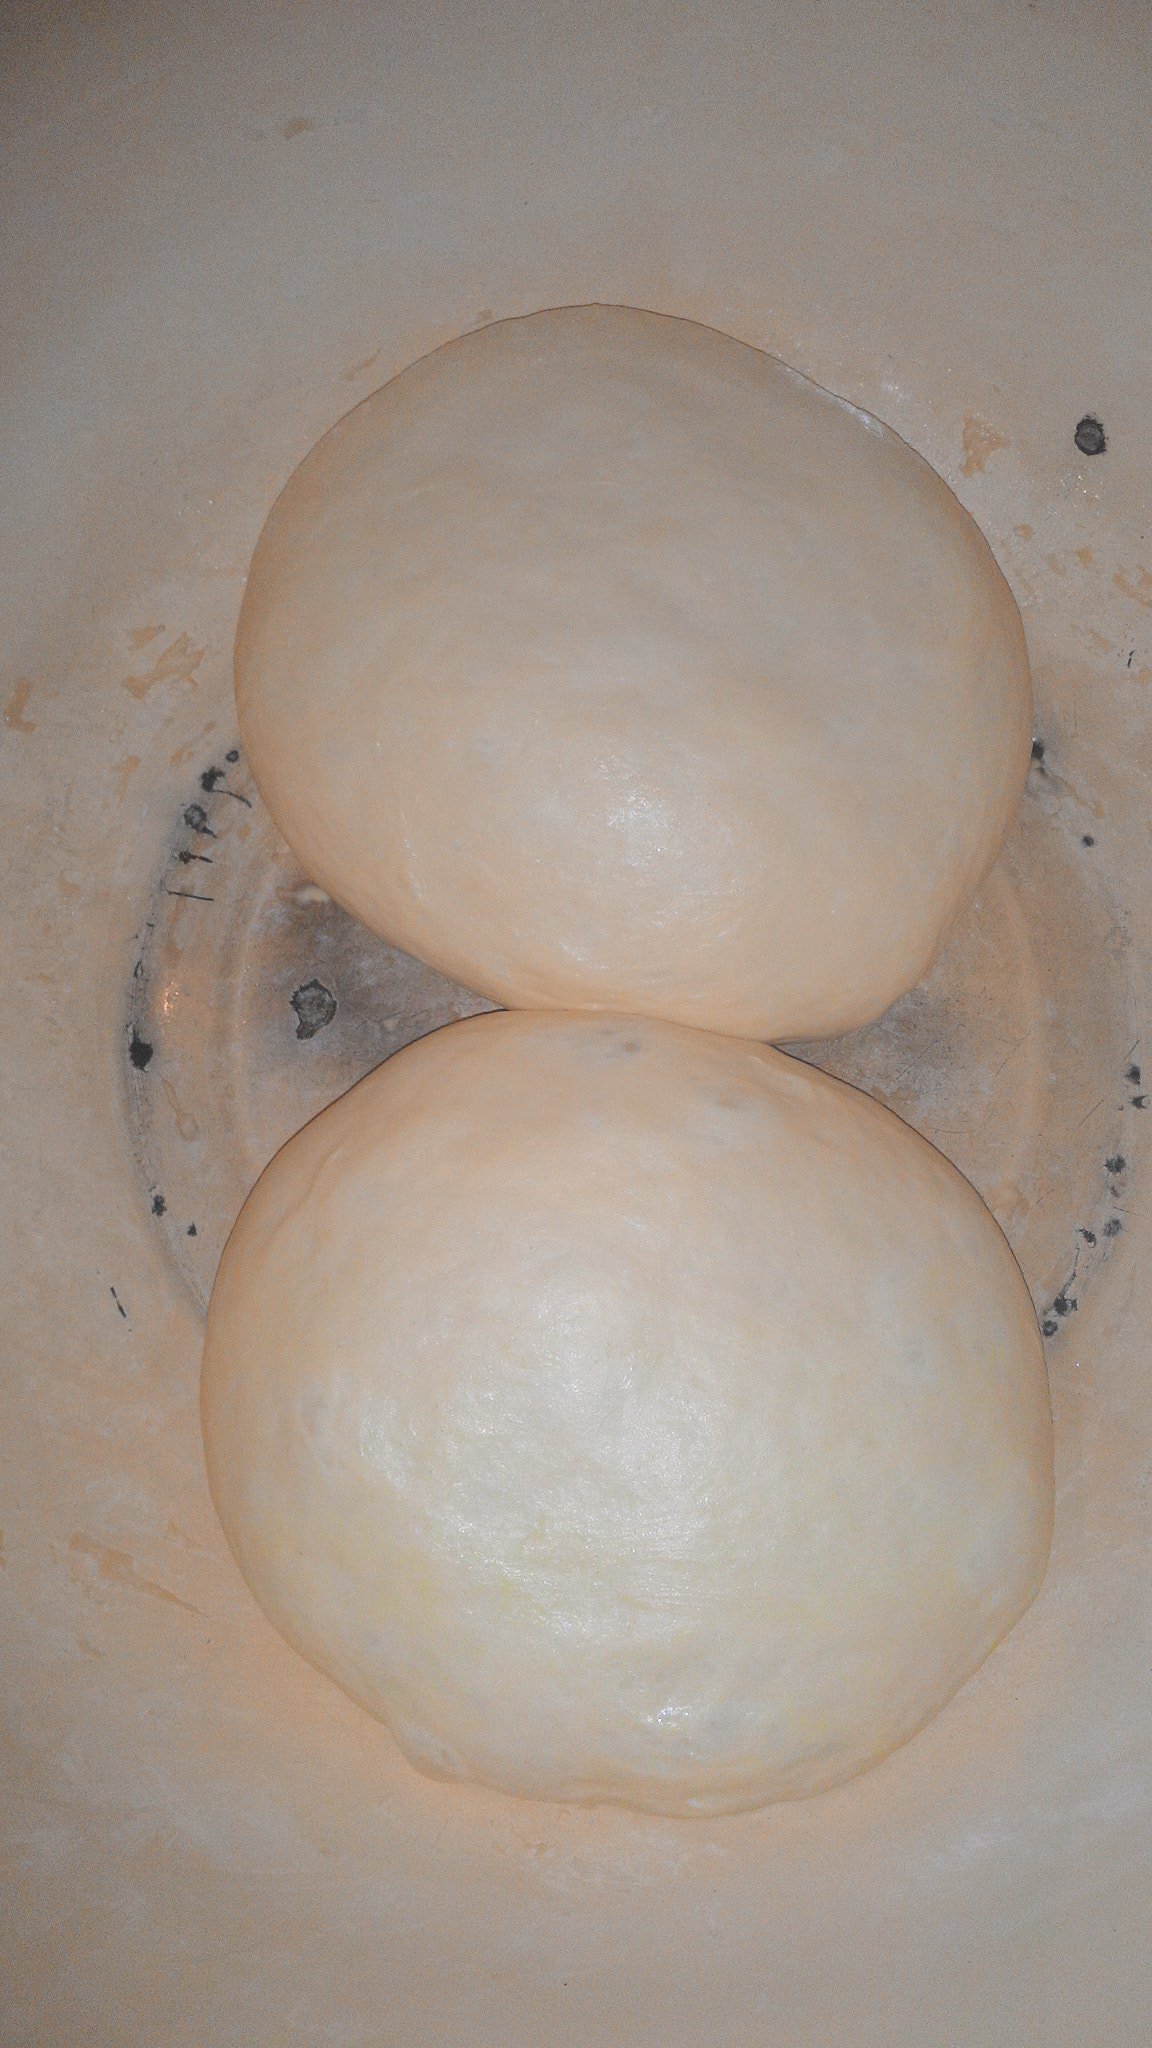 ASUS Z002 sample photo. Basic pizza dough photography